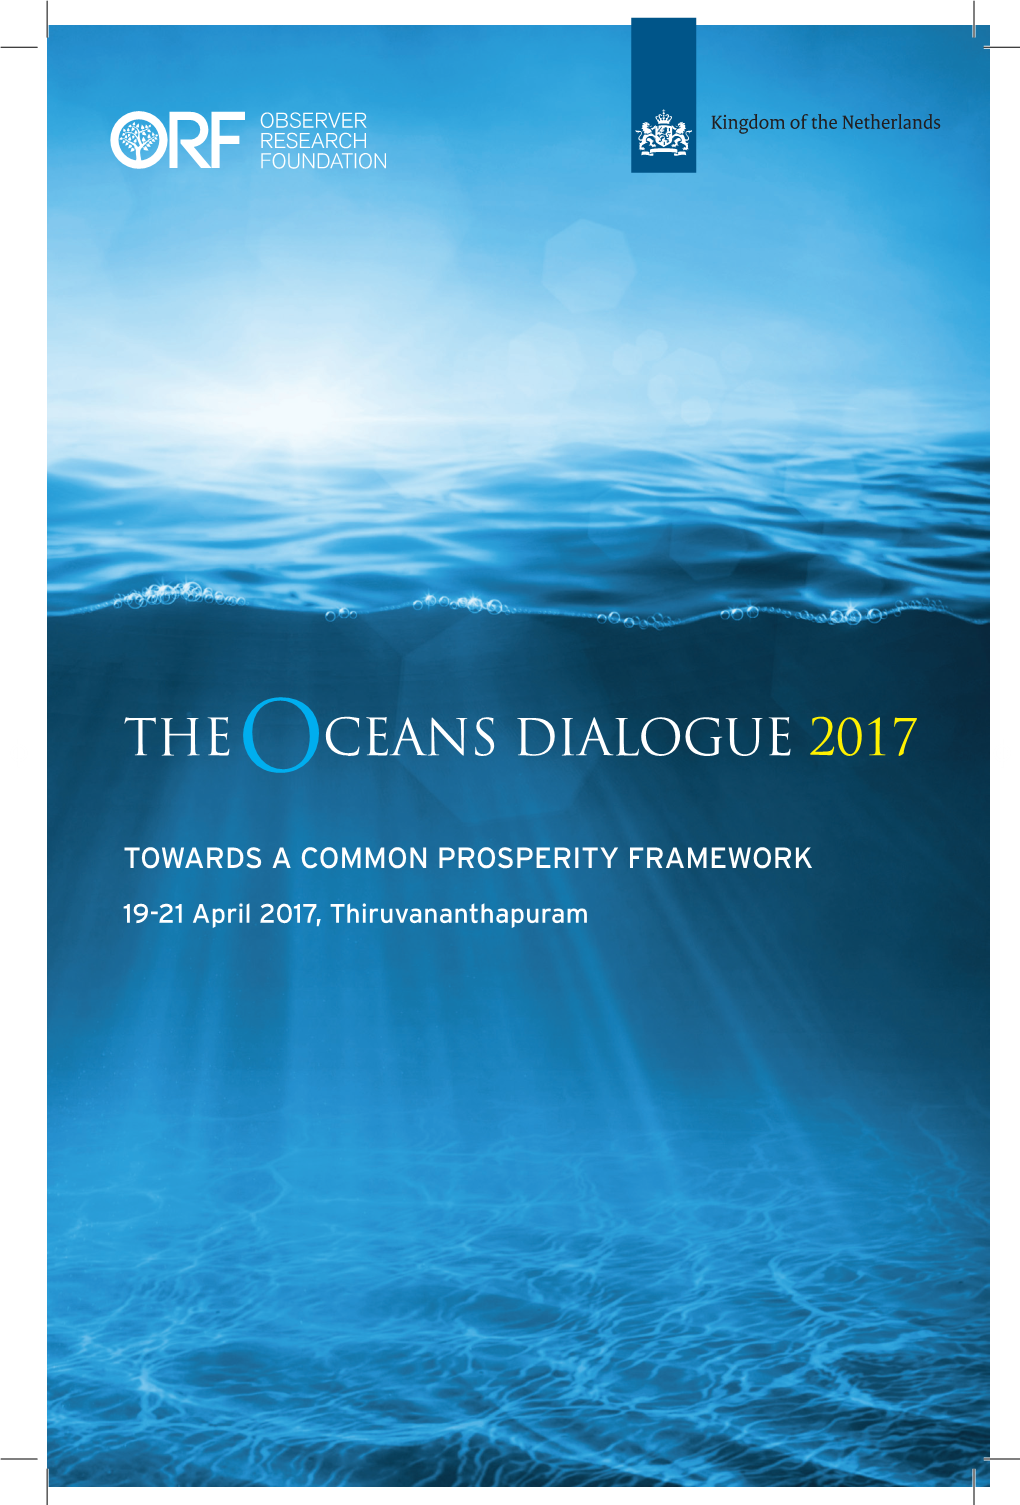 The Ceans Dialogue 2017